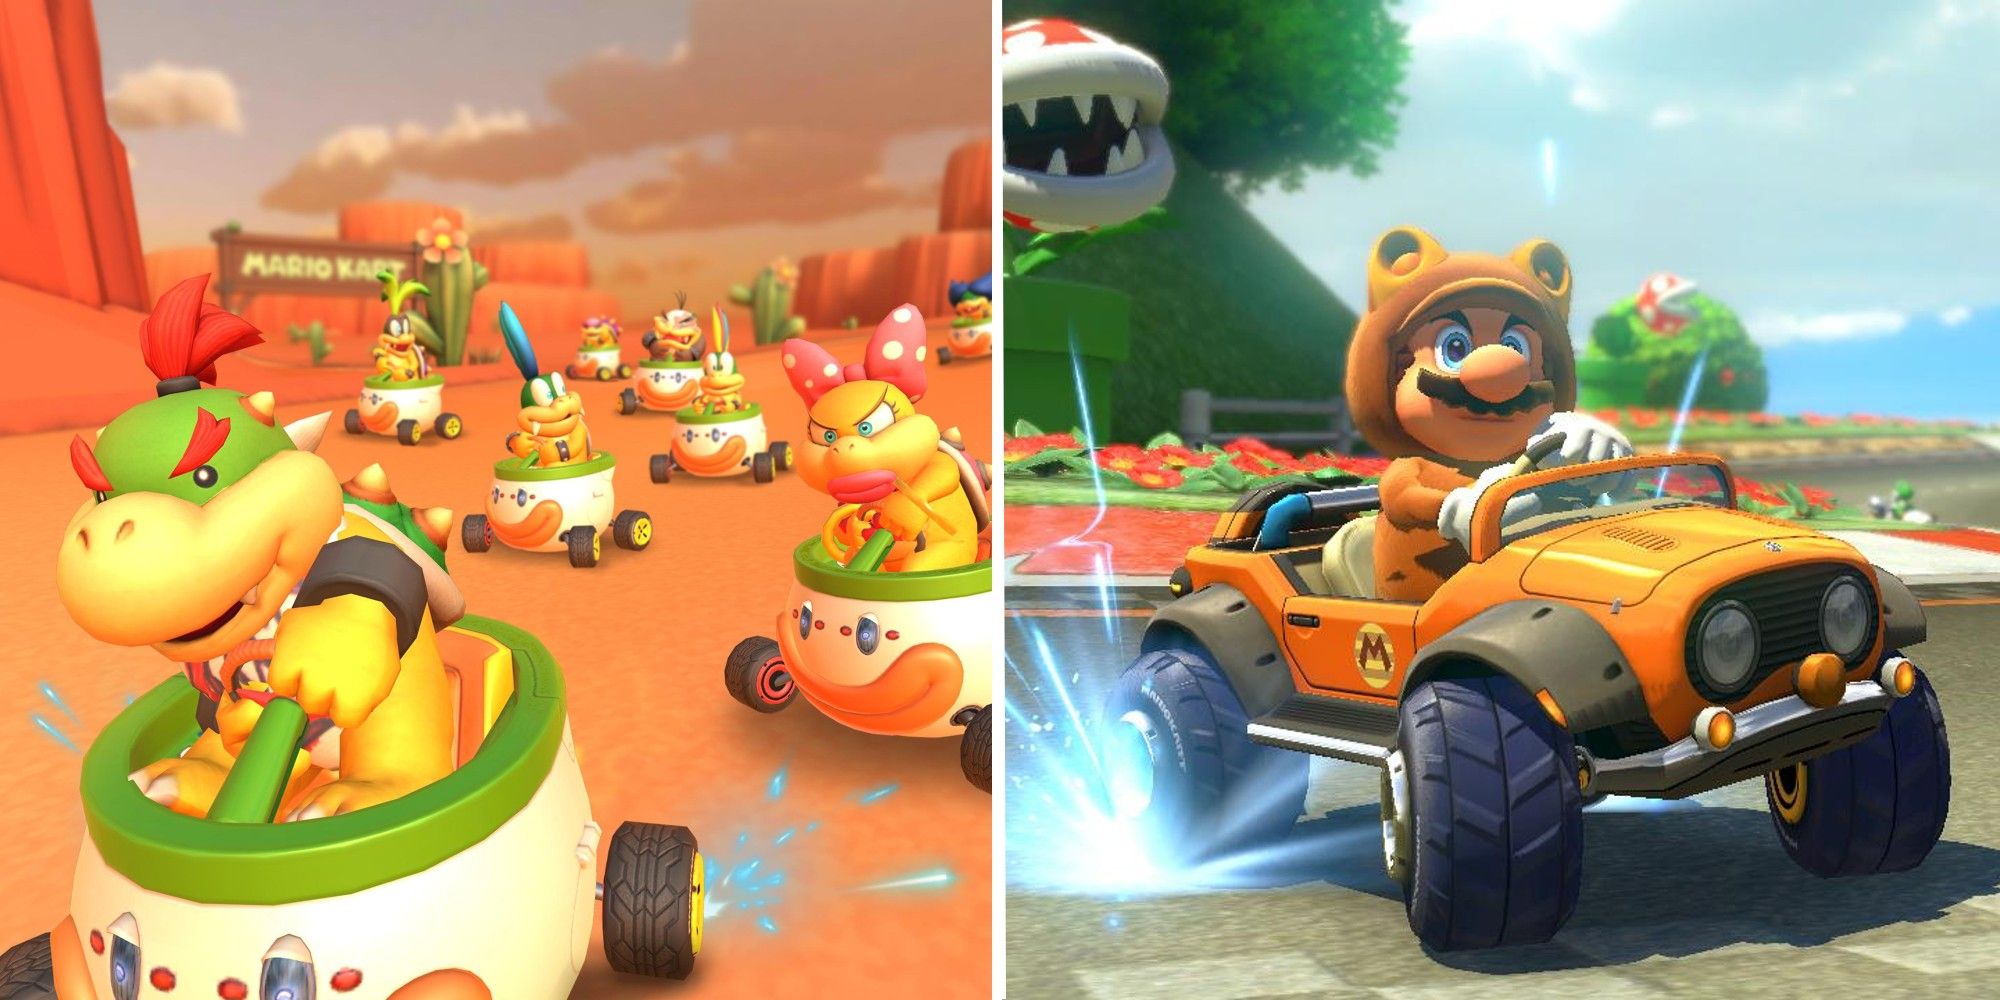 Mario Kart 8 CLOWN CAR and TANOOKI split